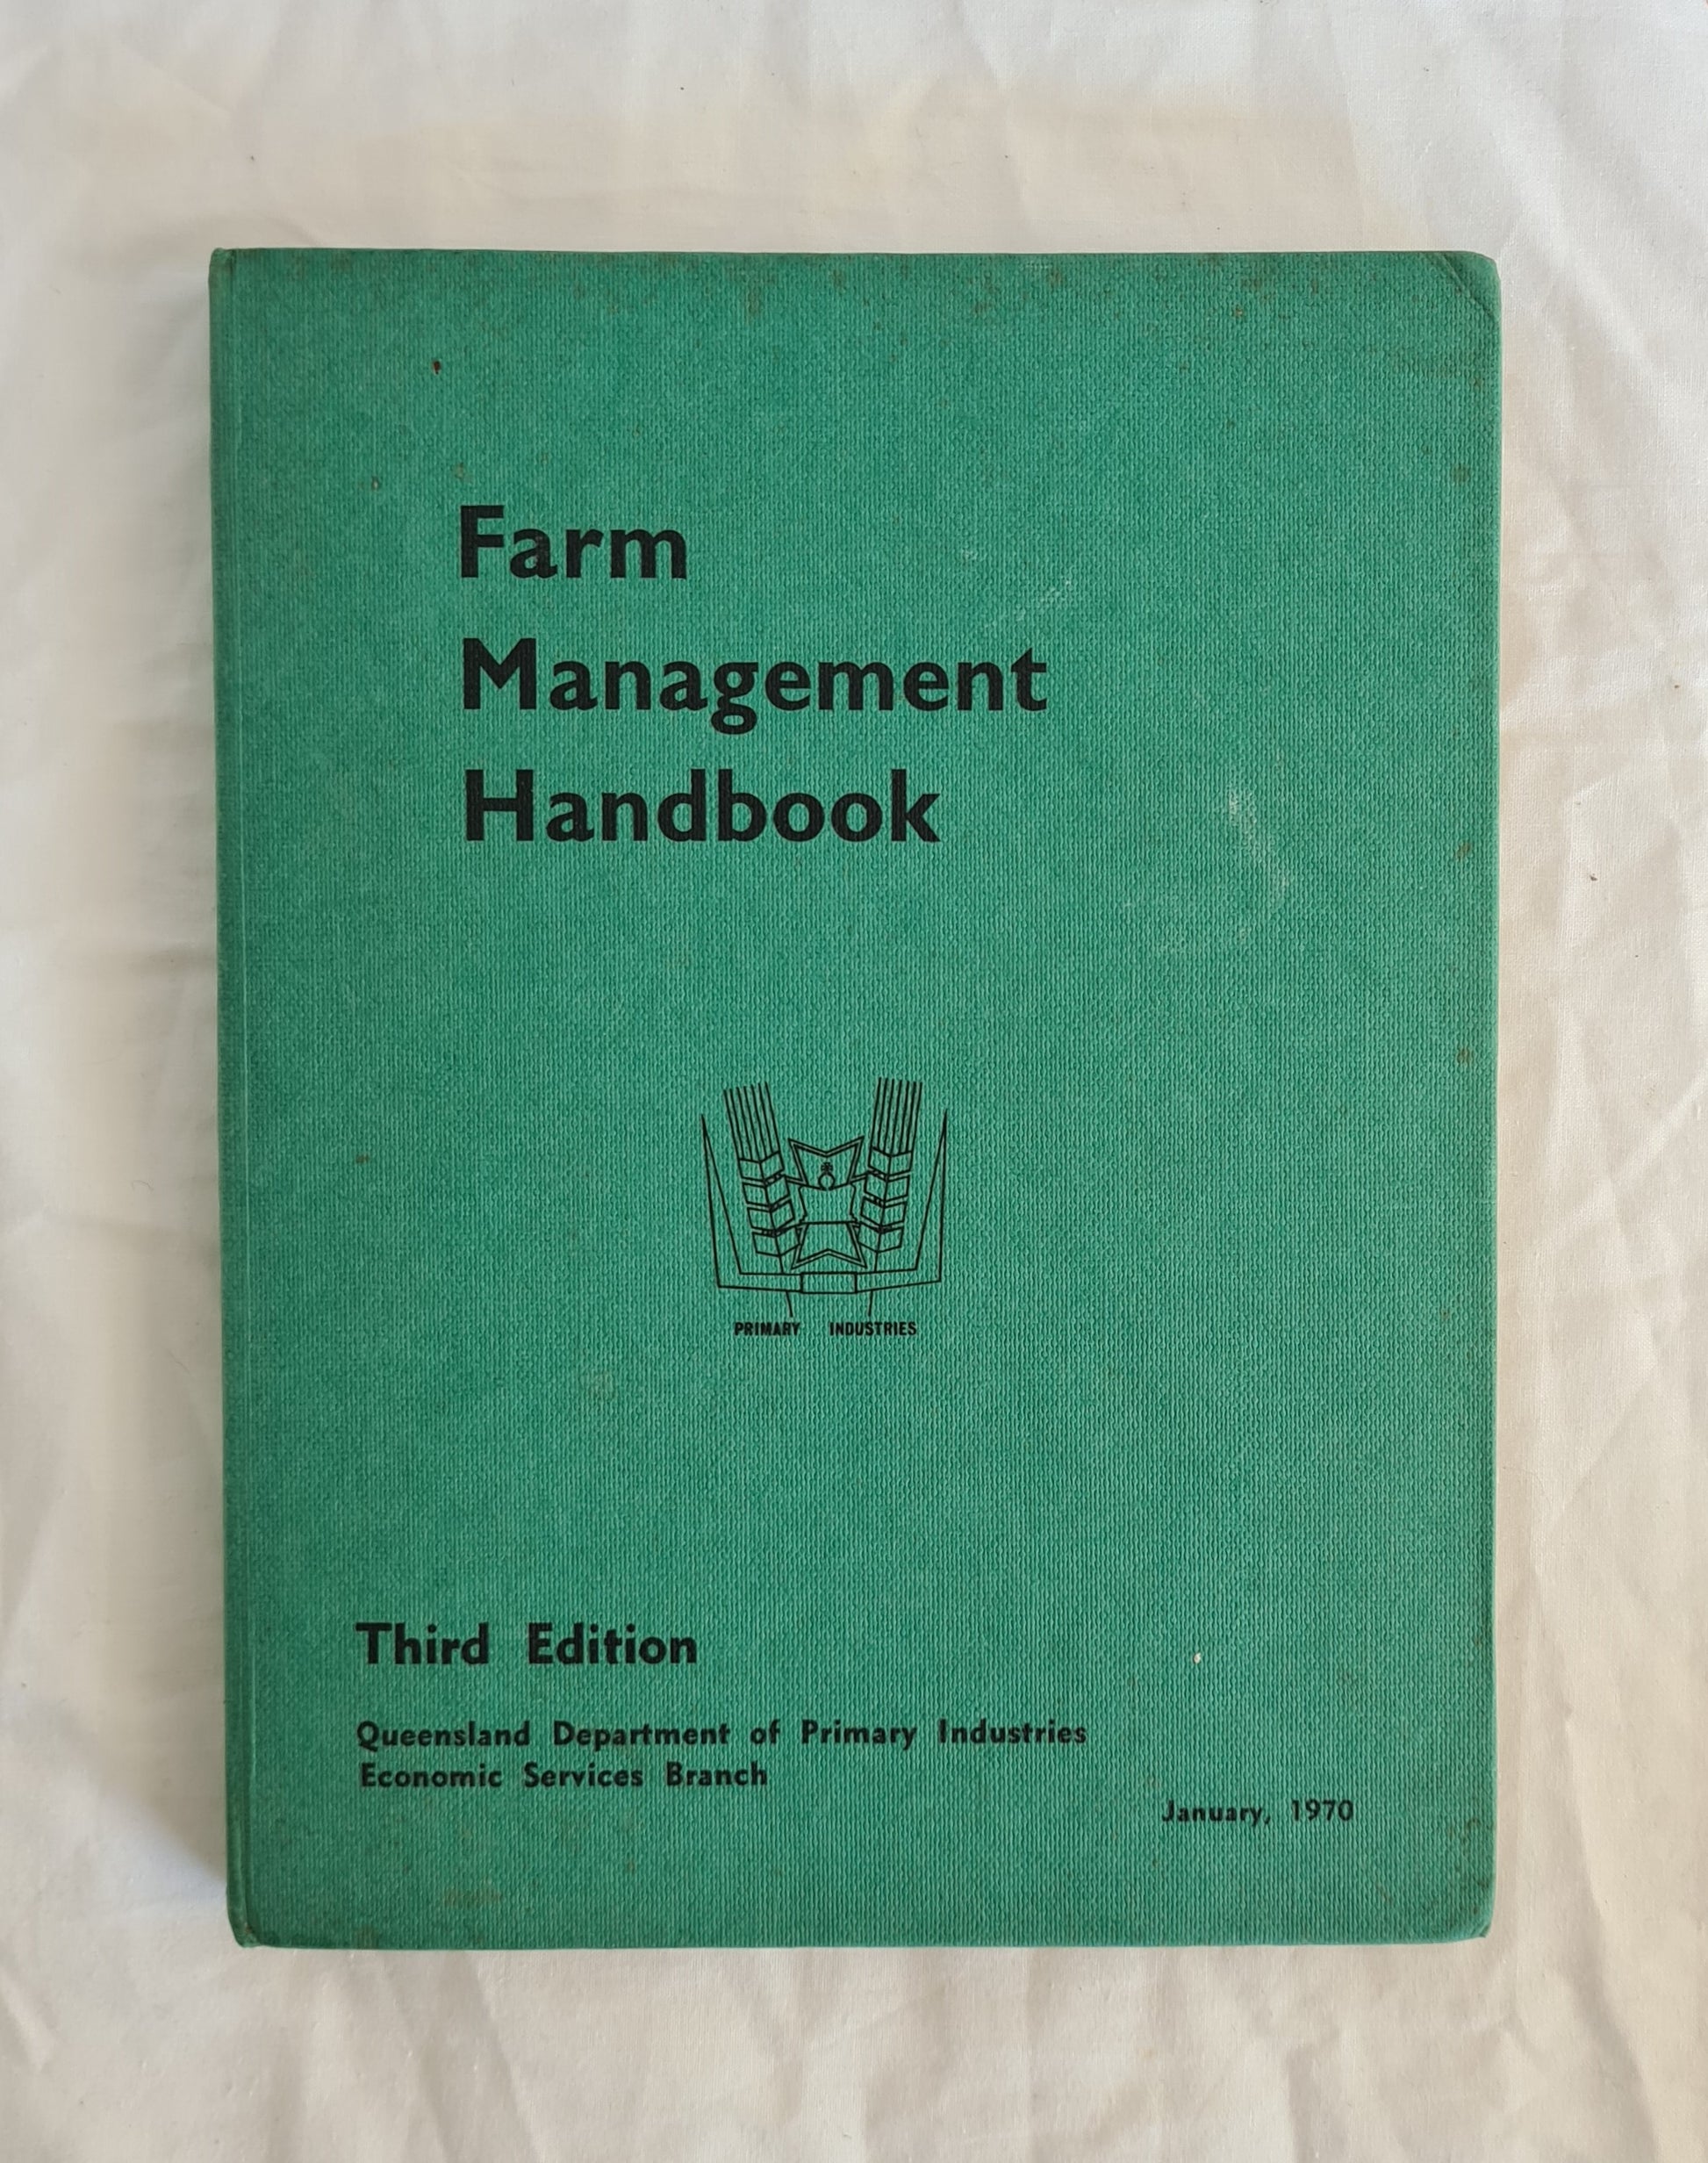 Farm Management Handbook